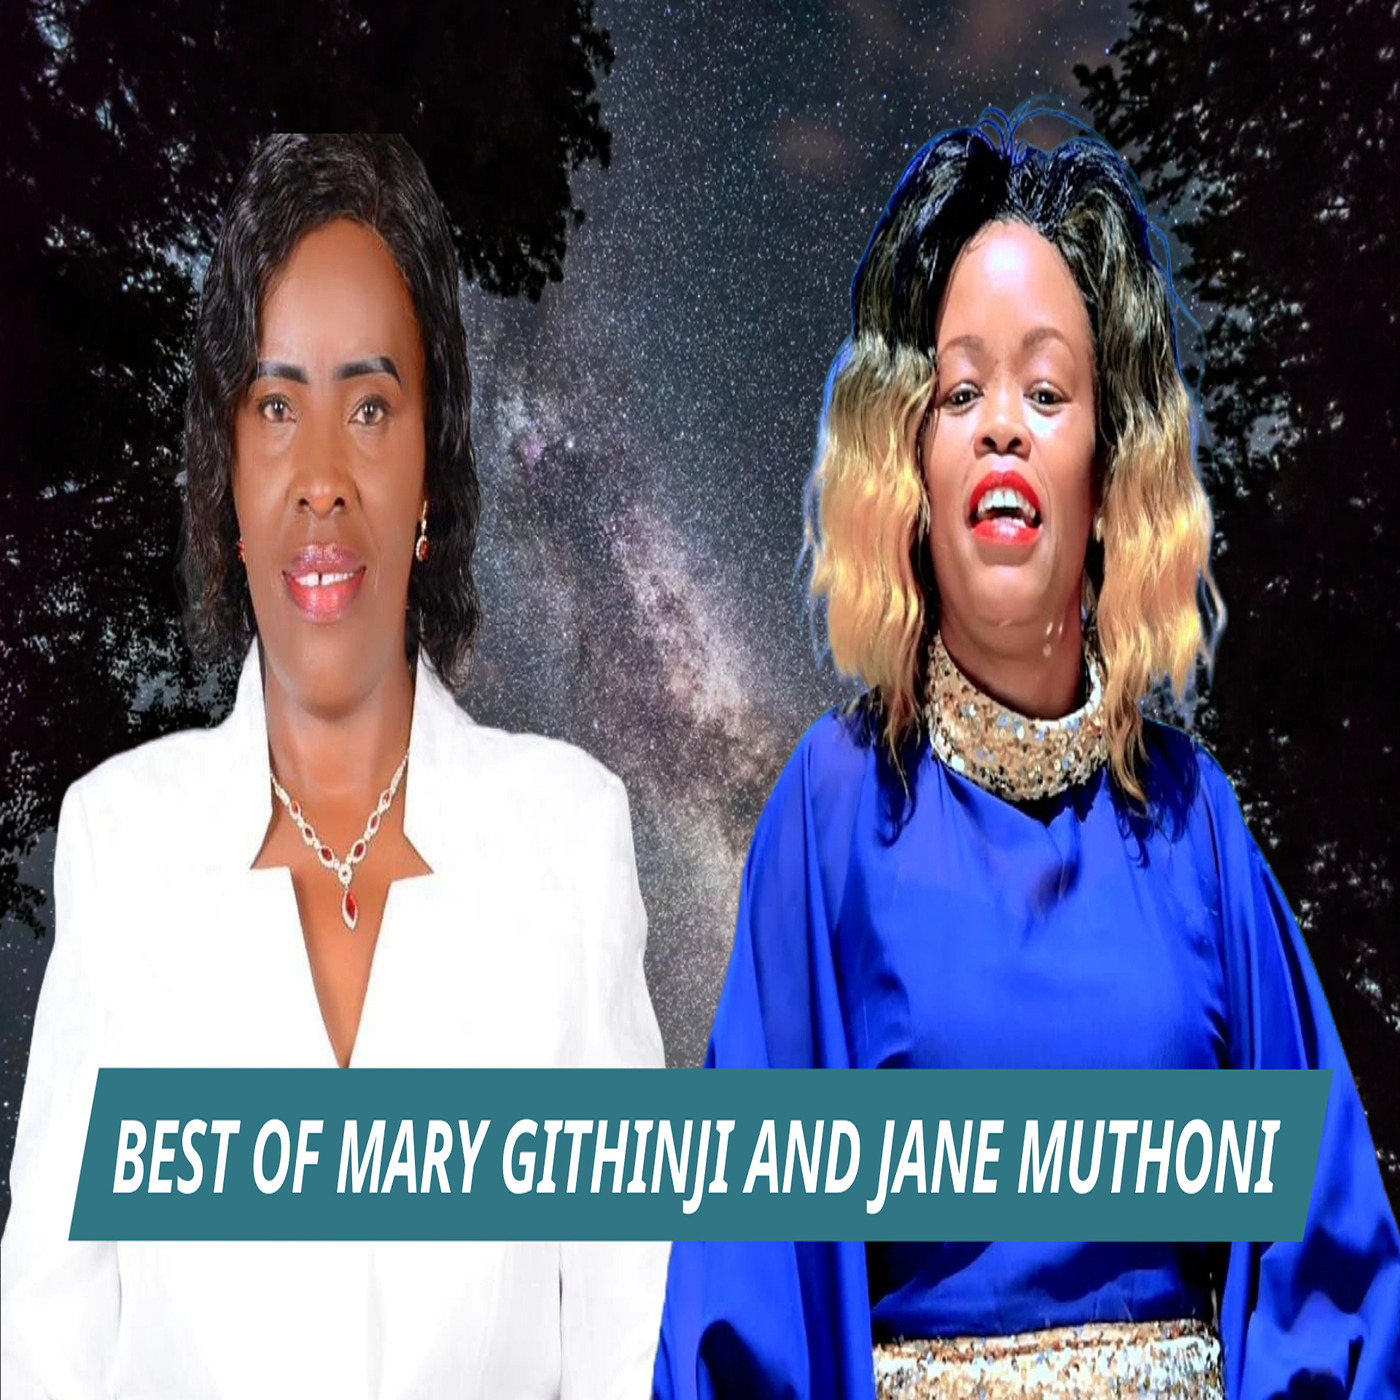 ▶️NYIMBO CIA KUINIRA NGAI - BEST OF MARY GITHINJI AND JANE MUTHONI